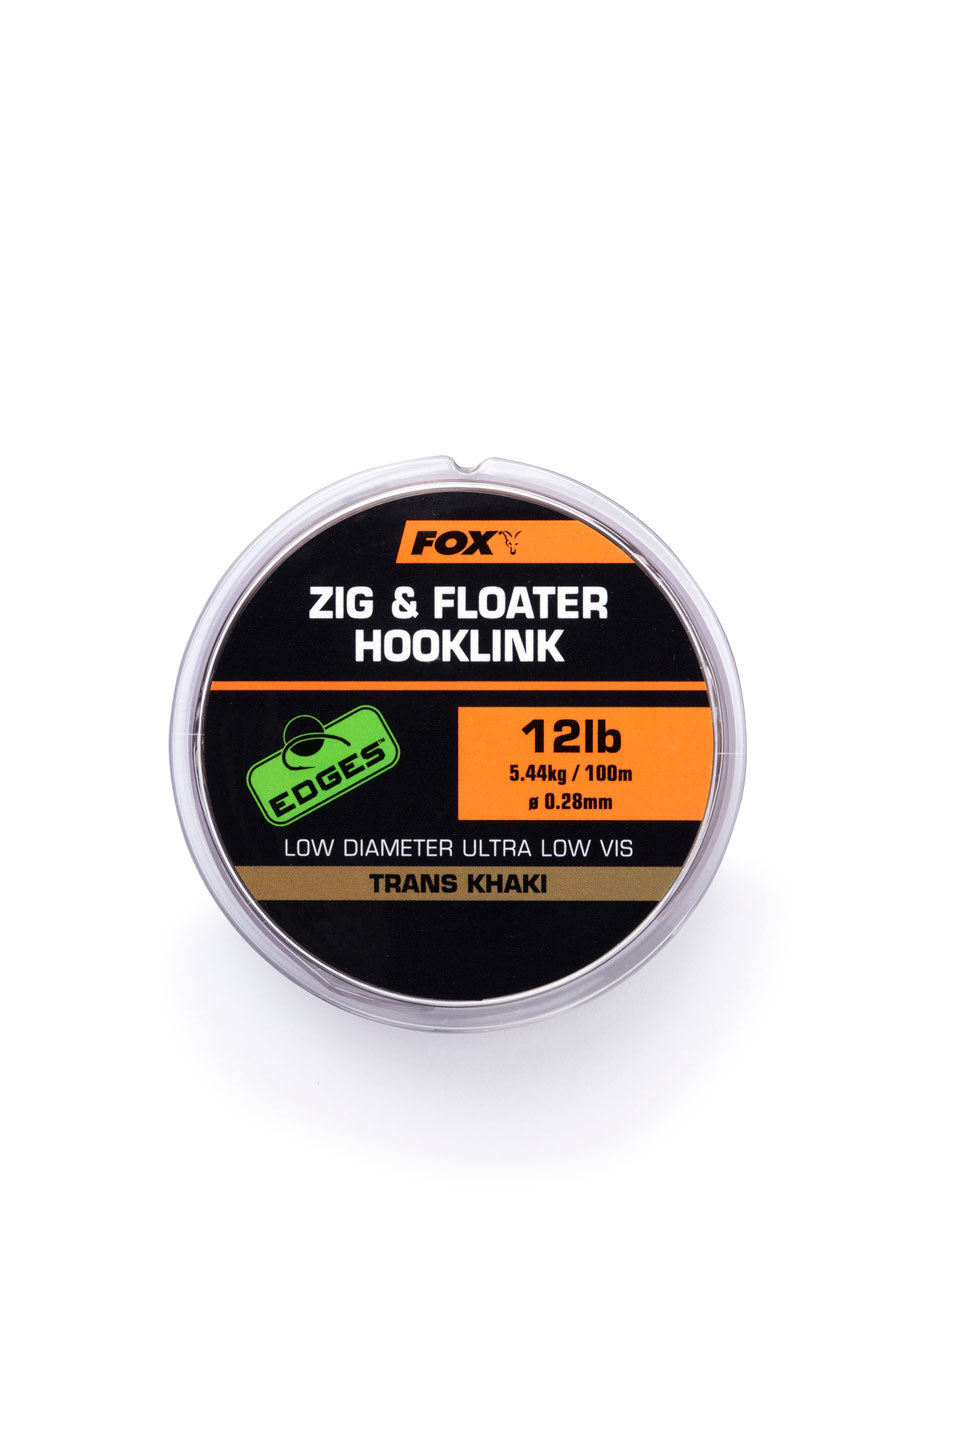 Fox Edges Zig & Floater Hooklink